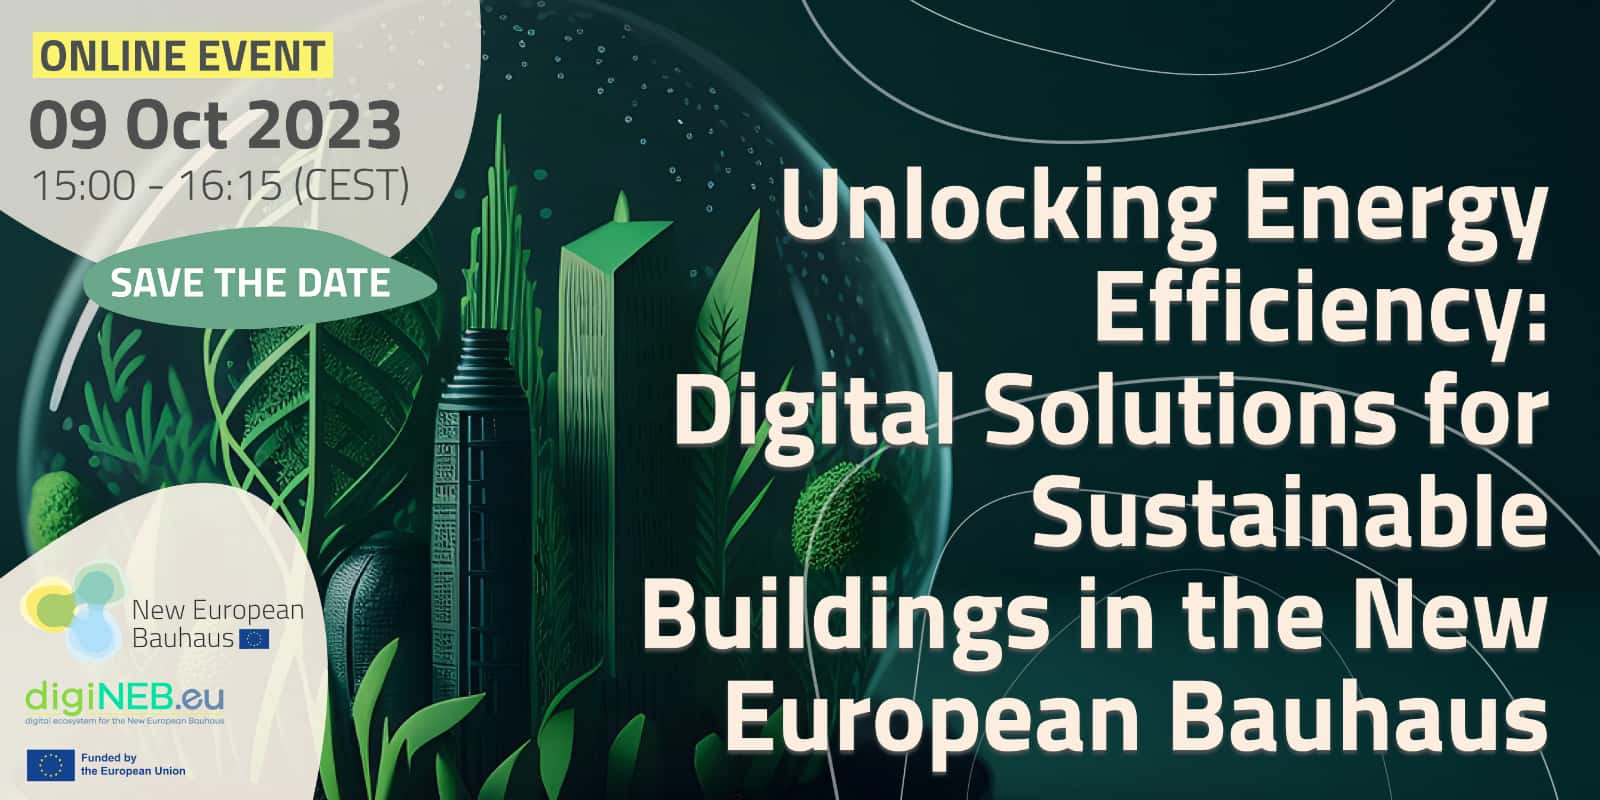 Unlocking Energy Efficiency: Digital Solutions for Sustainable Buildings in the New European Bauhaus